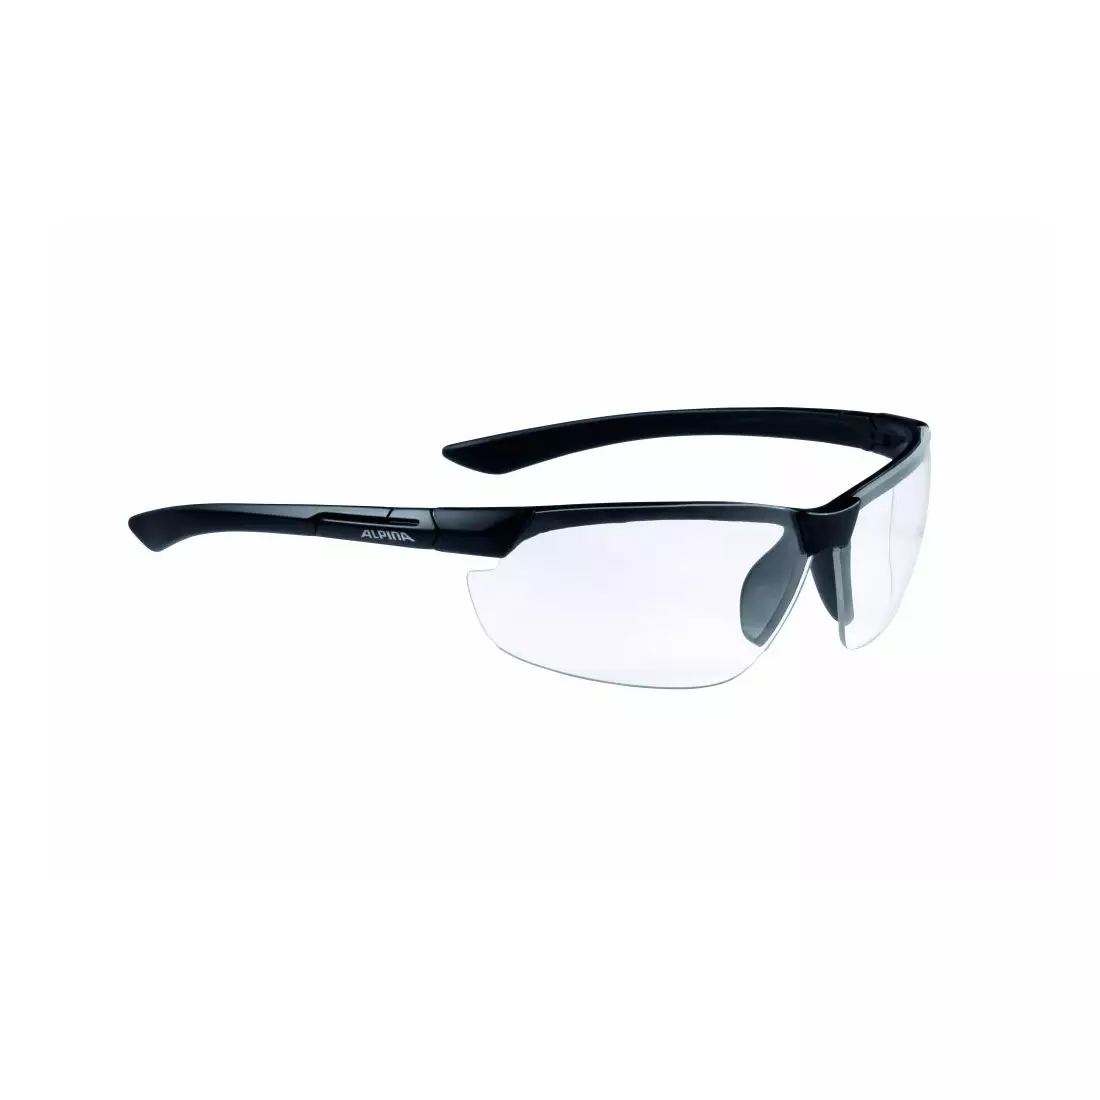 ALPINA okulary sportowe draff black matt, szkło S0 A8558431